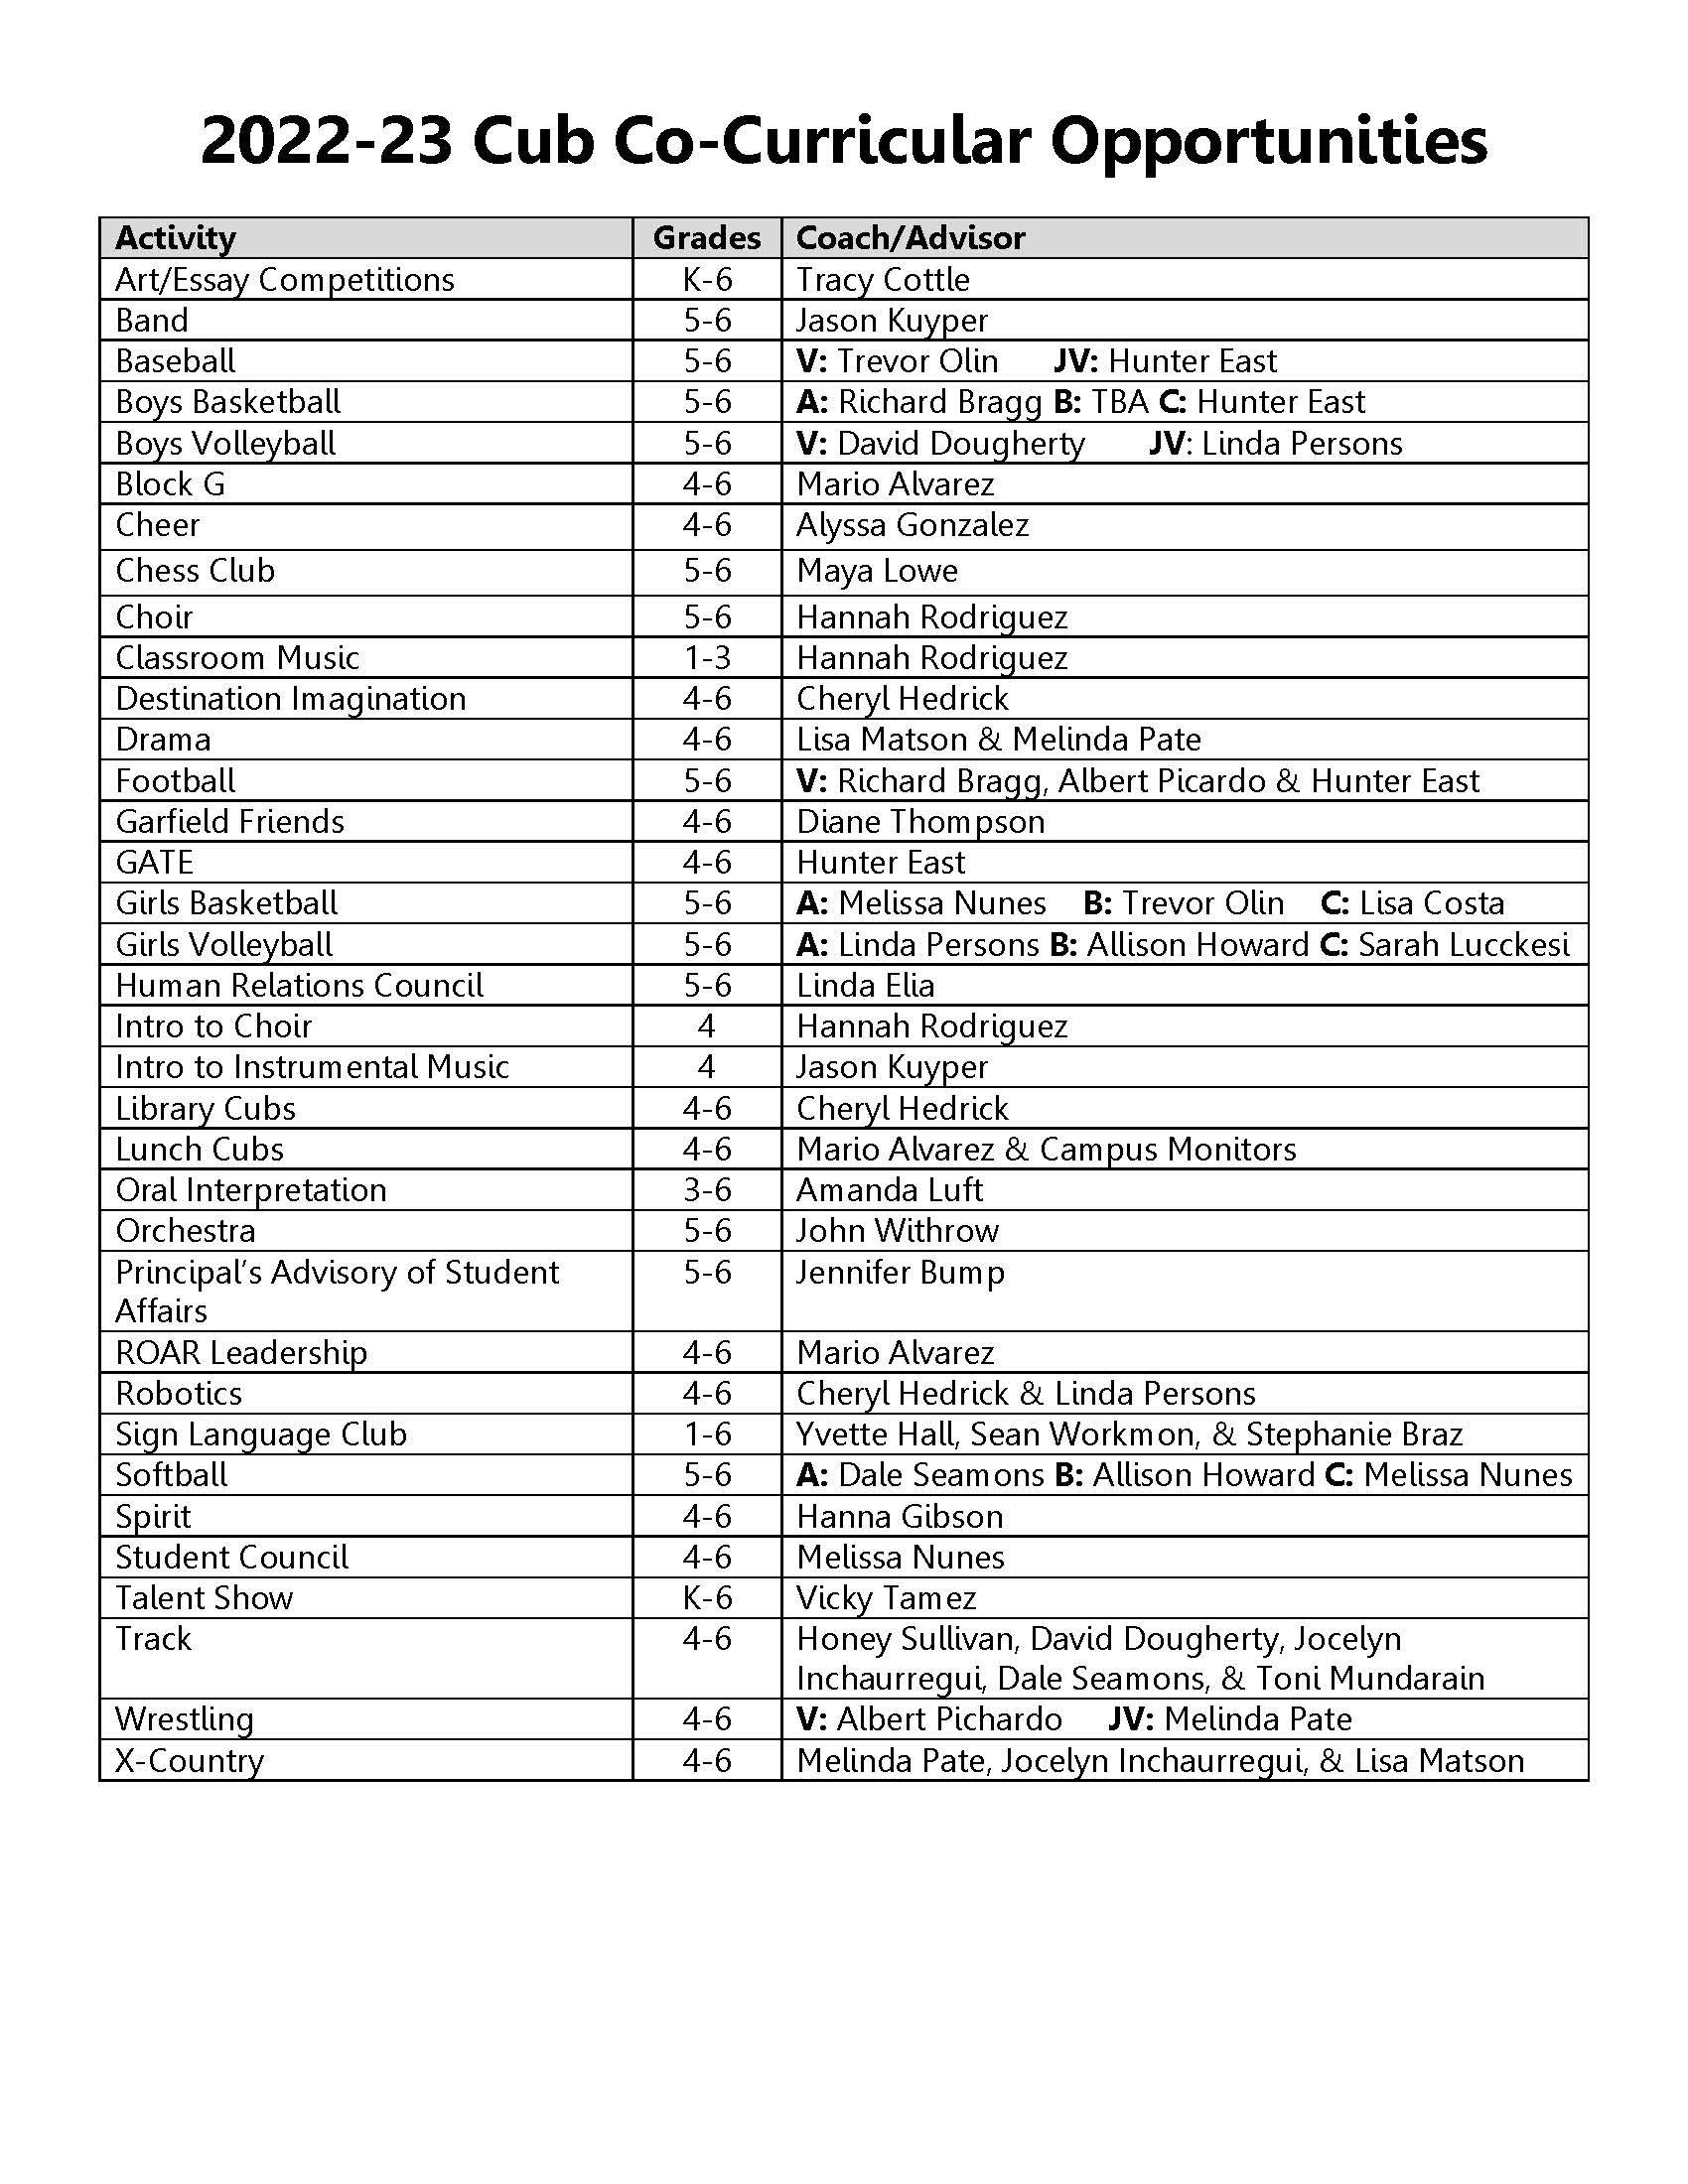 List of Garfield 22-23 Co-Curricular Activities